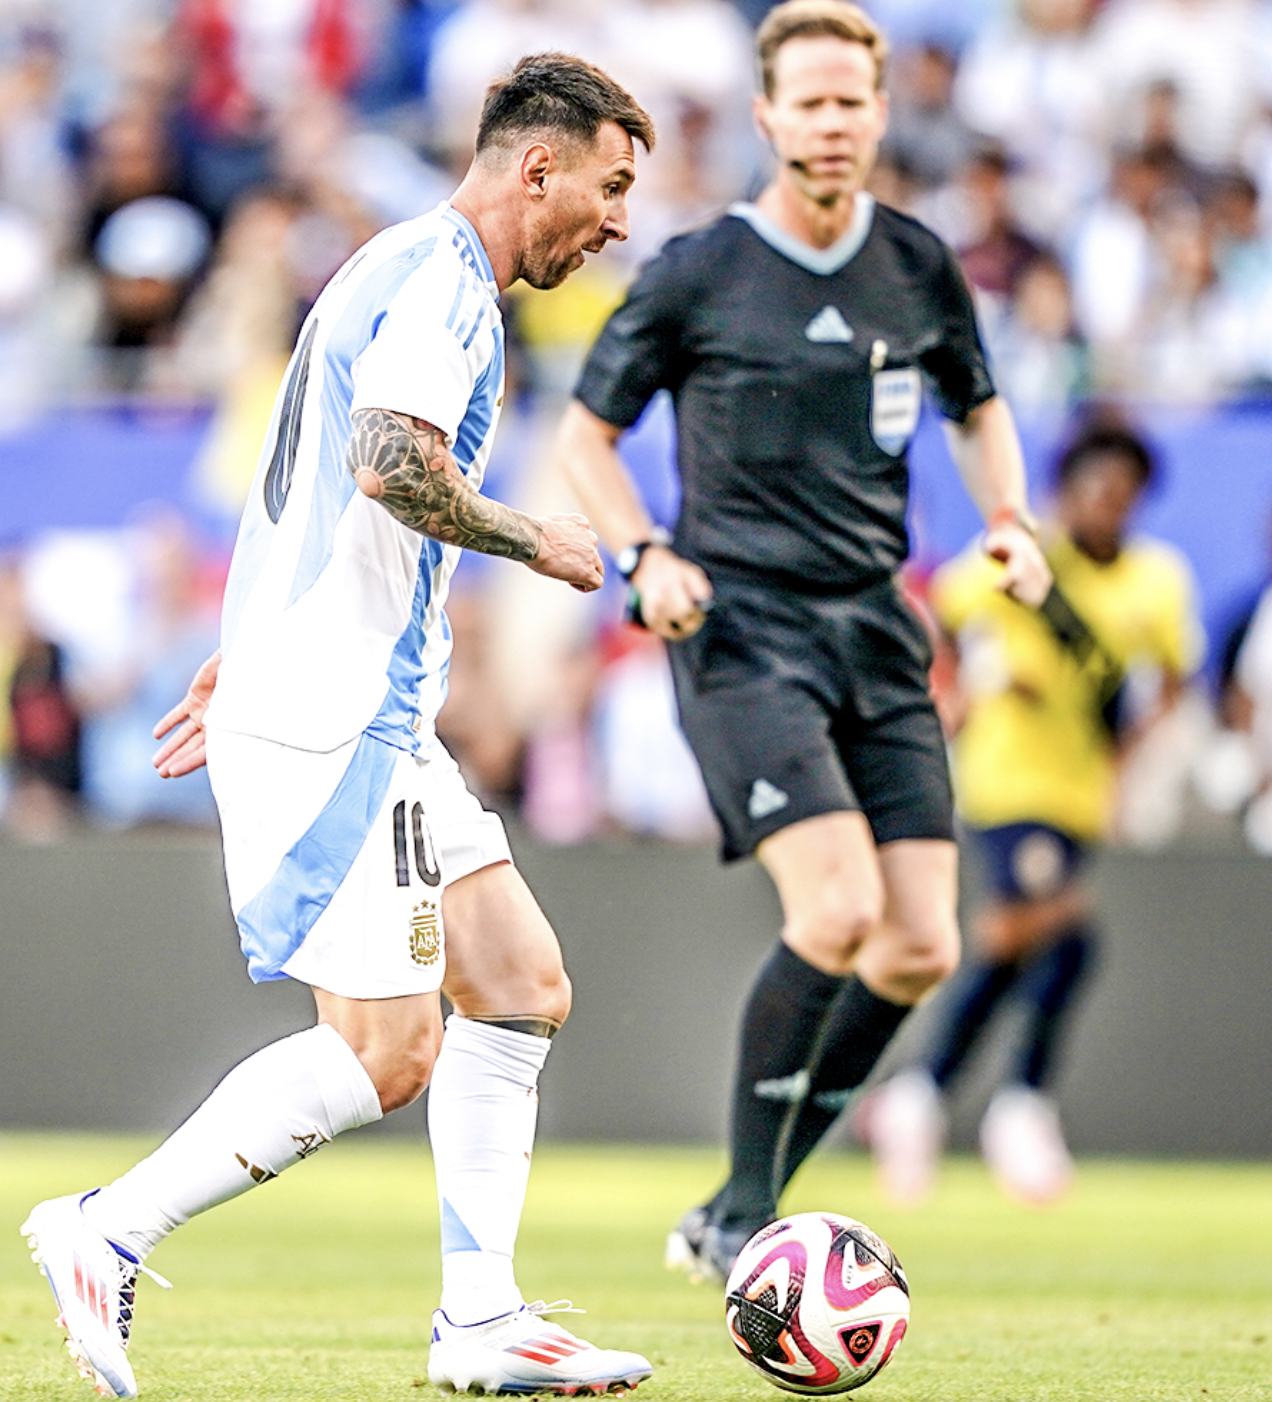 Argentina vs. Ecuador match analysis and perspectives heading into